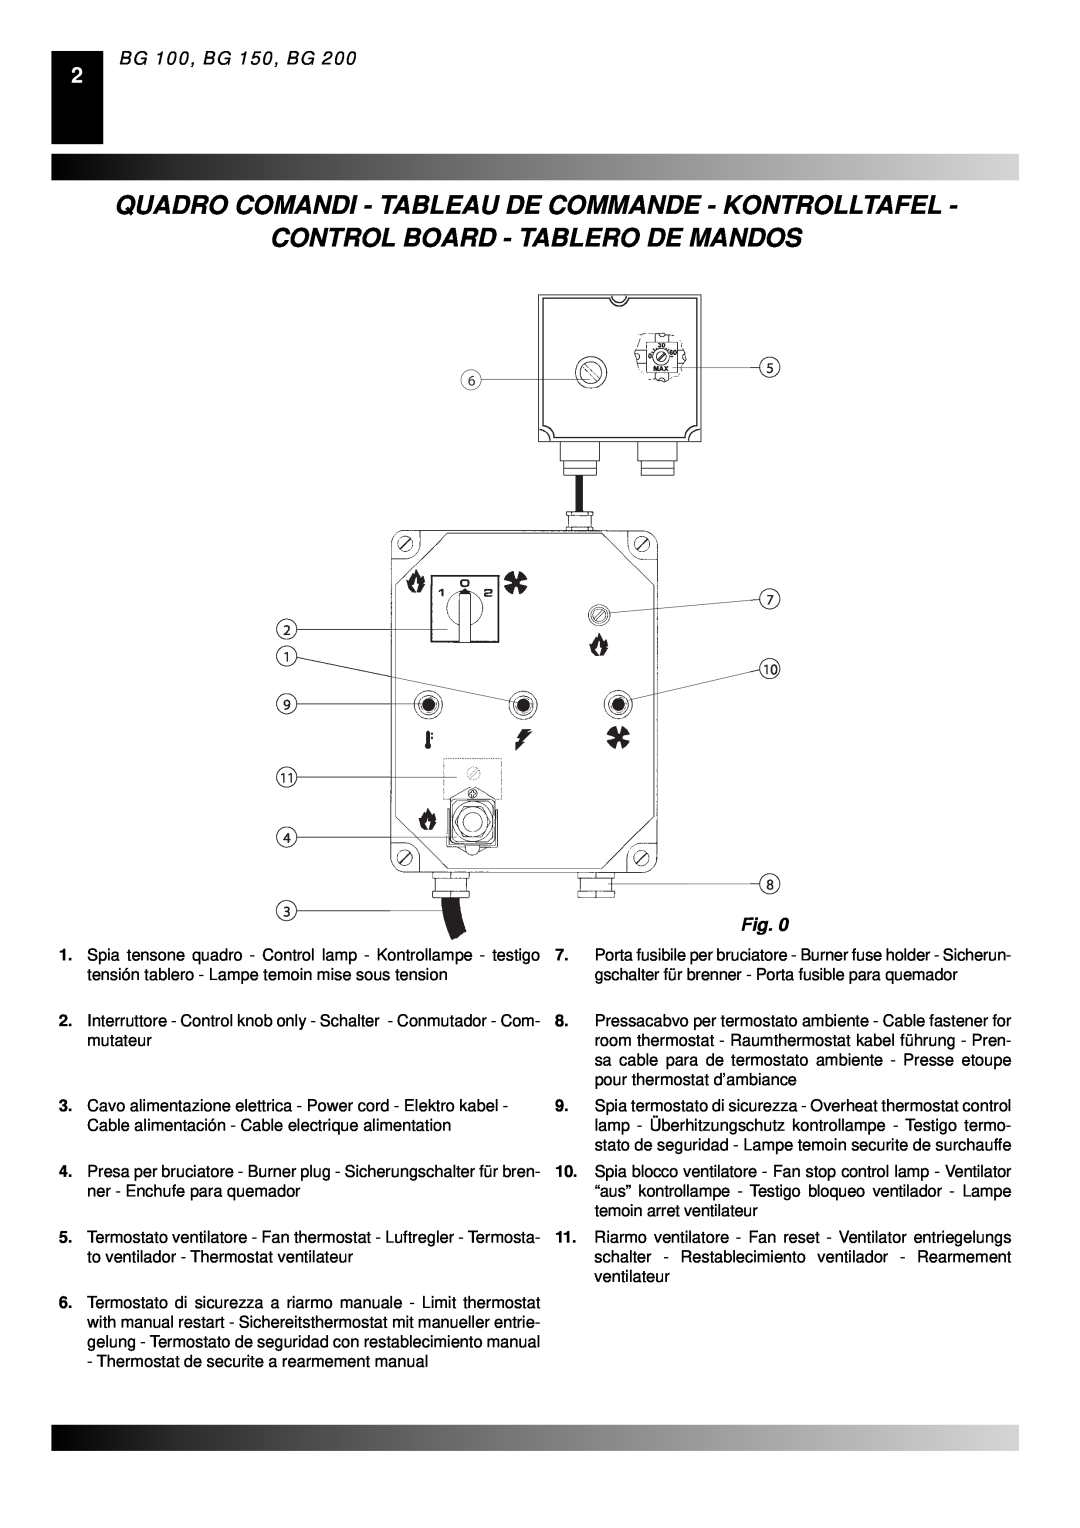 Master Lock BG 200 manual BG 100, BG 150, BG, Quadro Comandi - Tableau De Commande - Kontrolltafel 